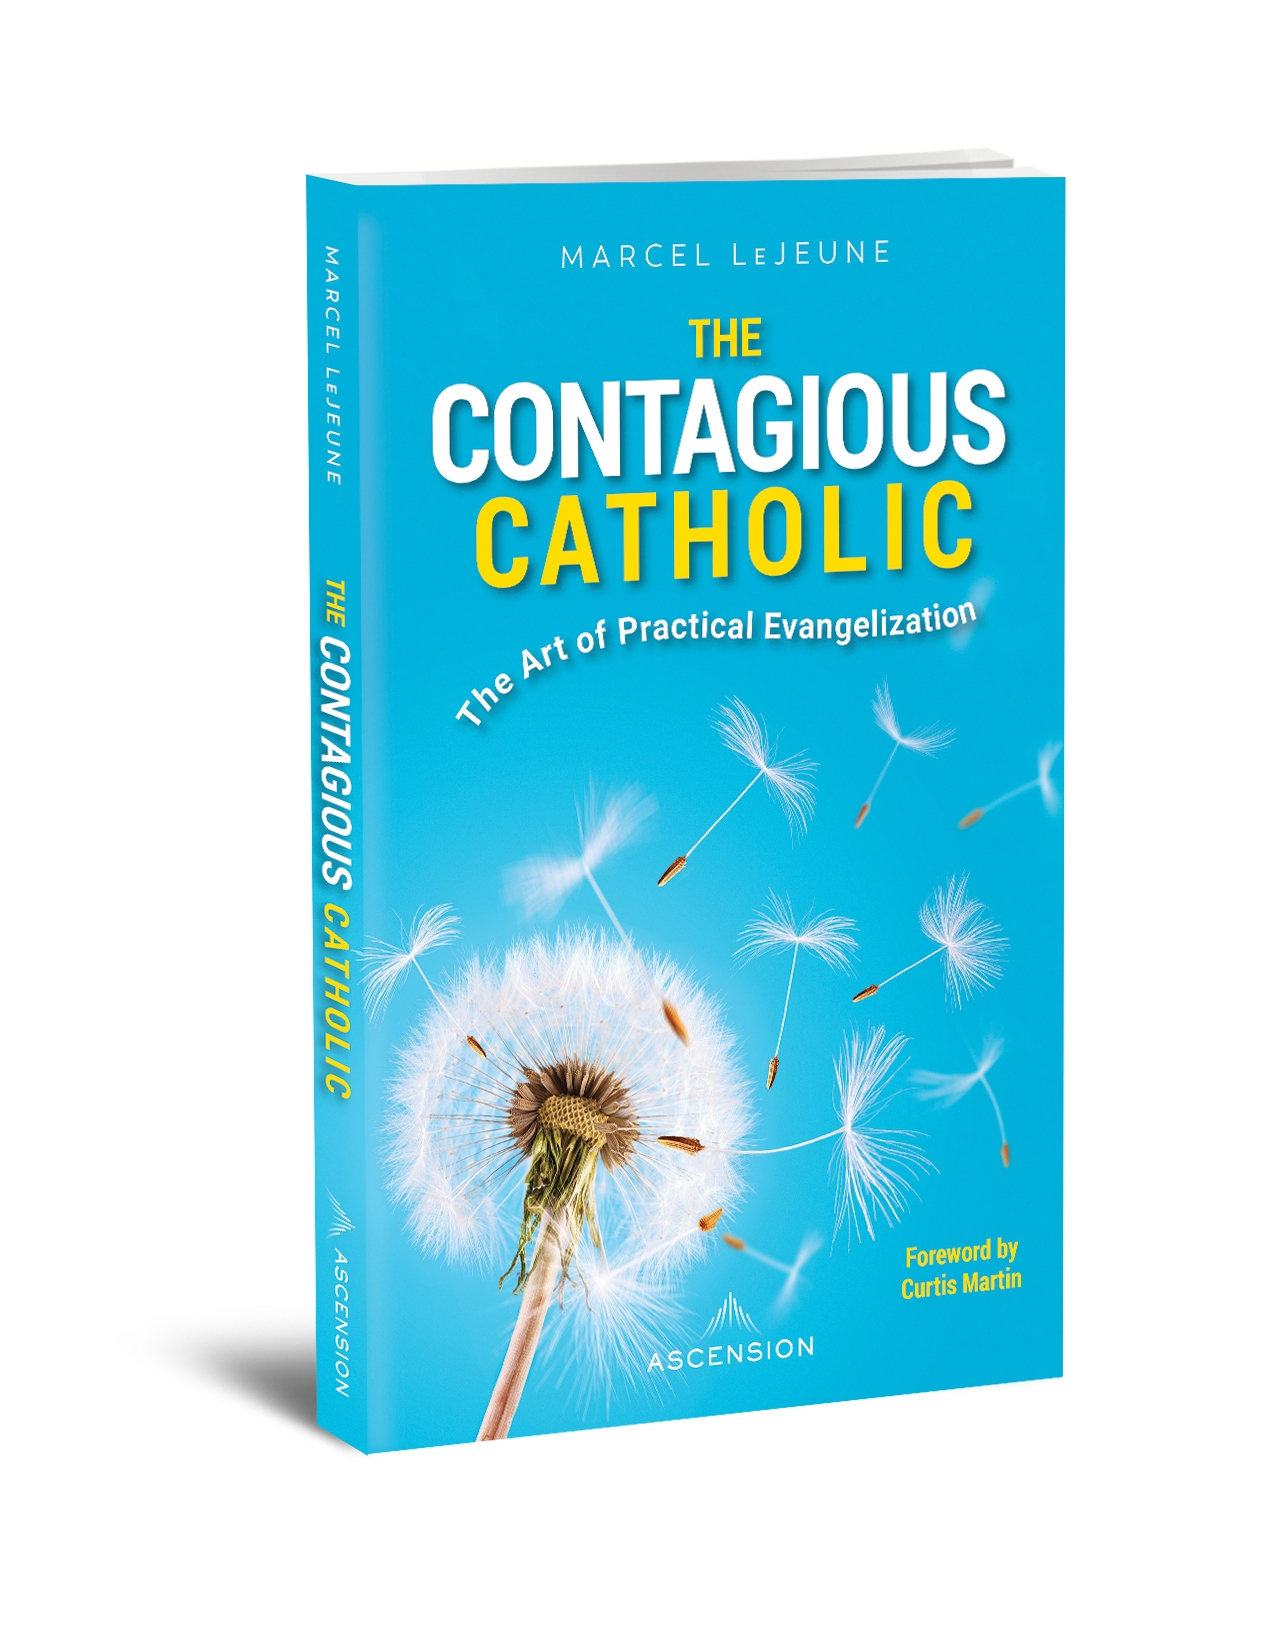 The Contagious Catholic book cover